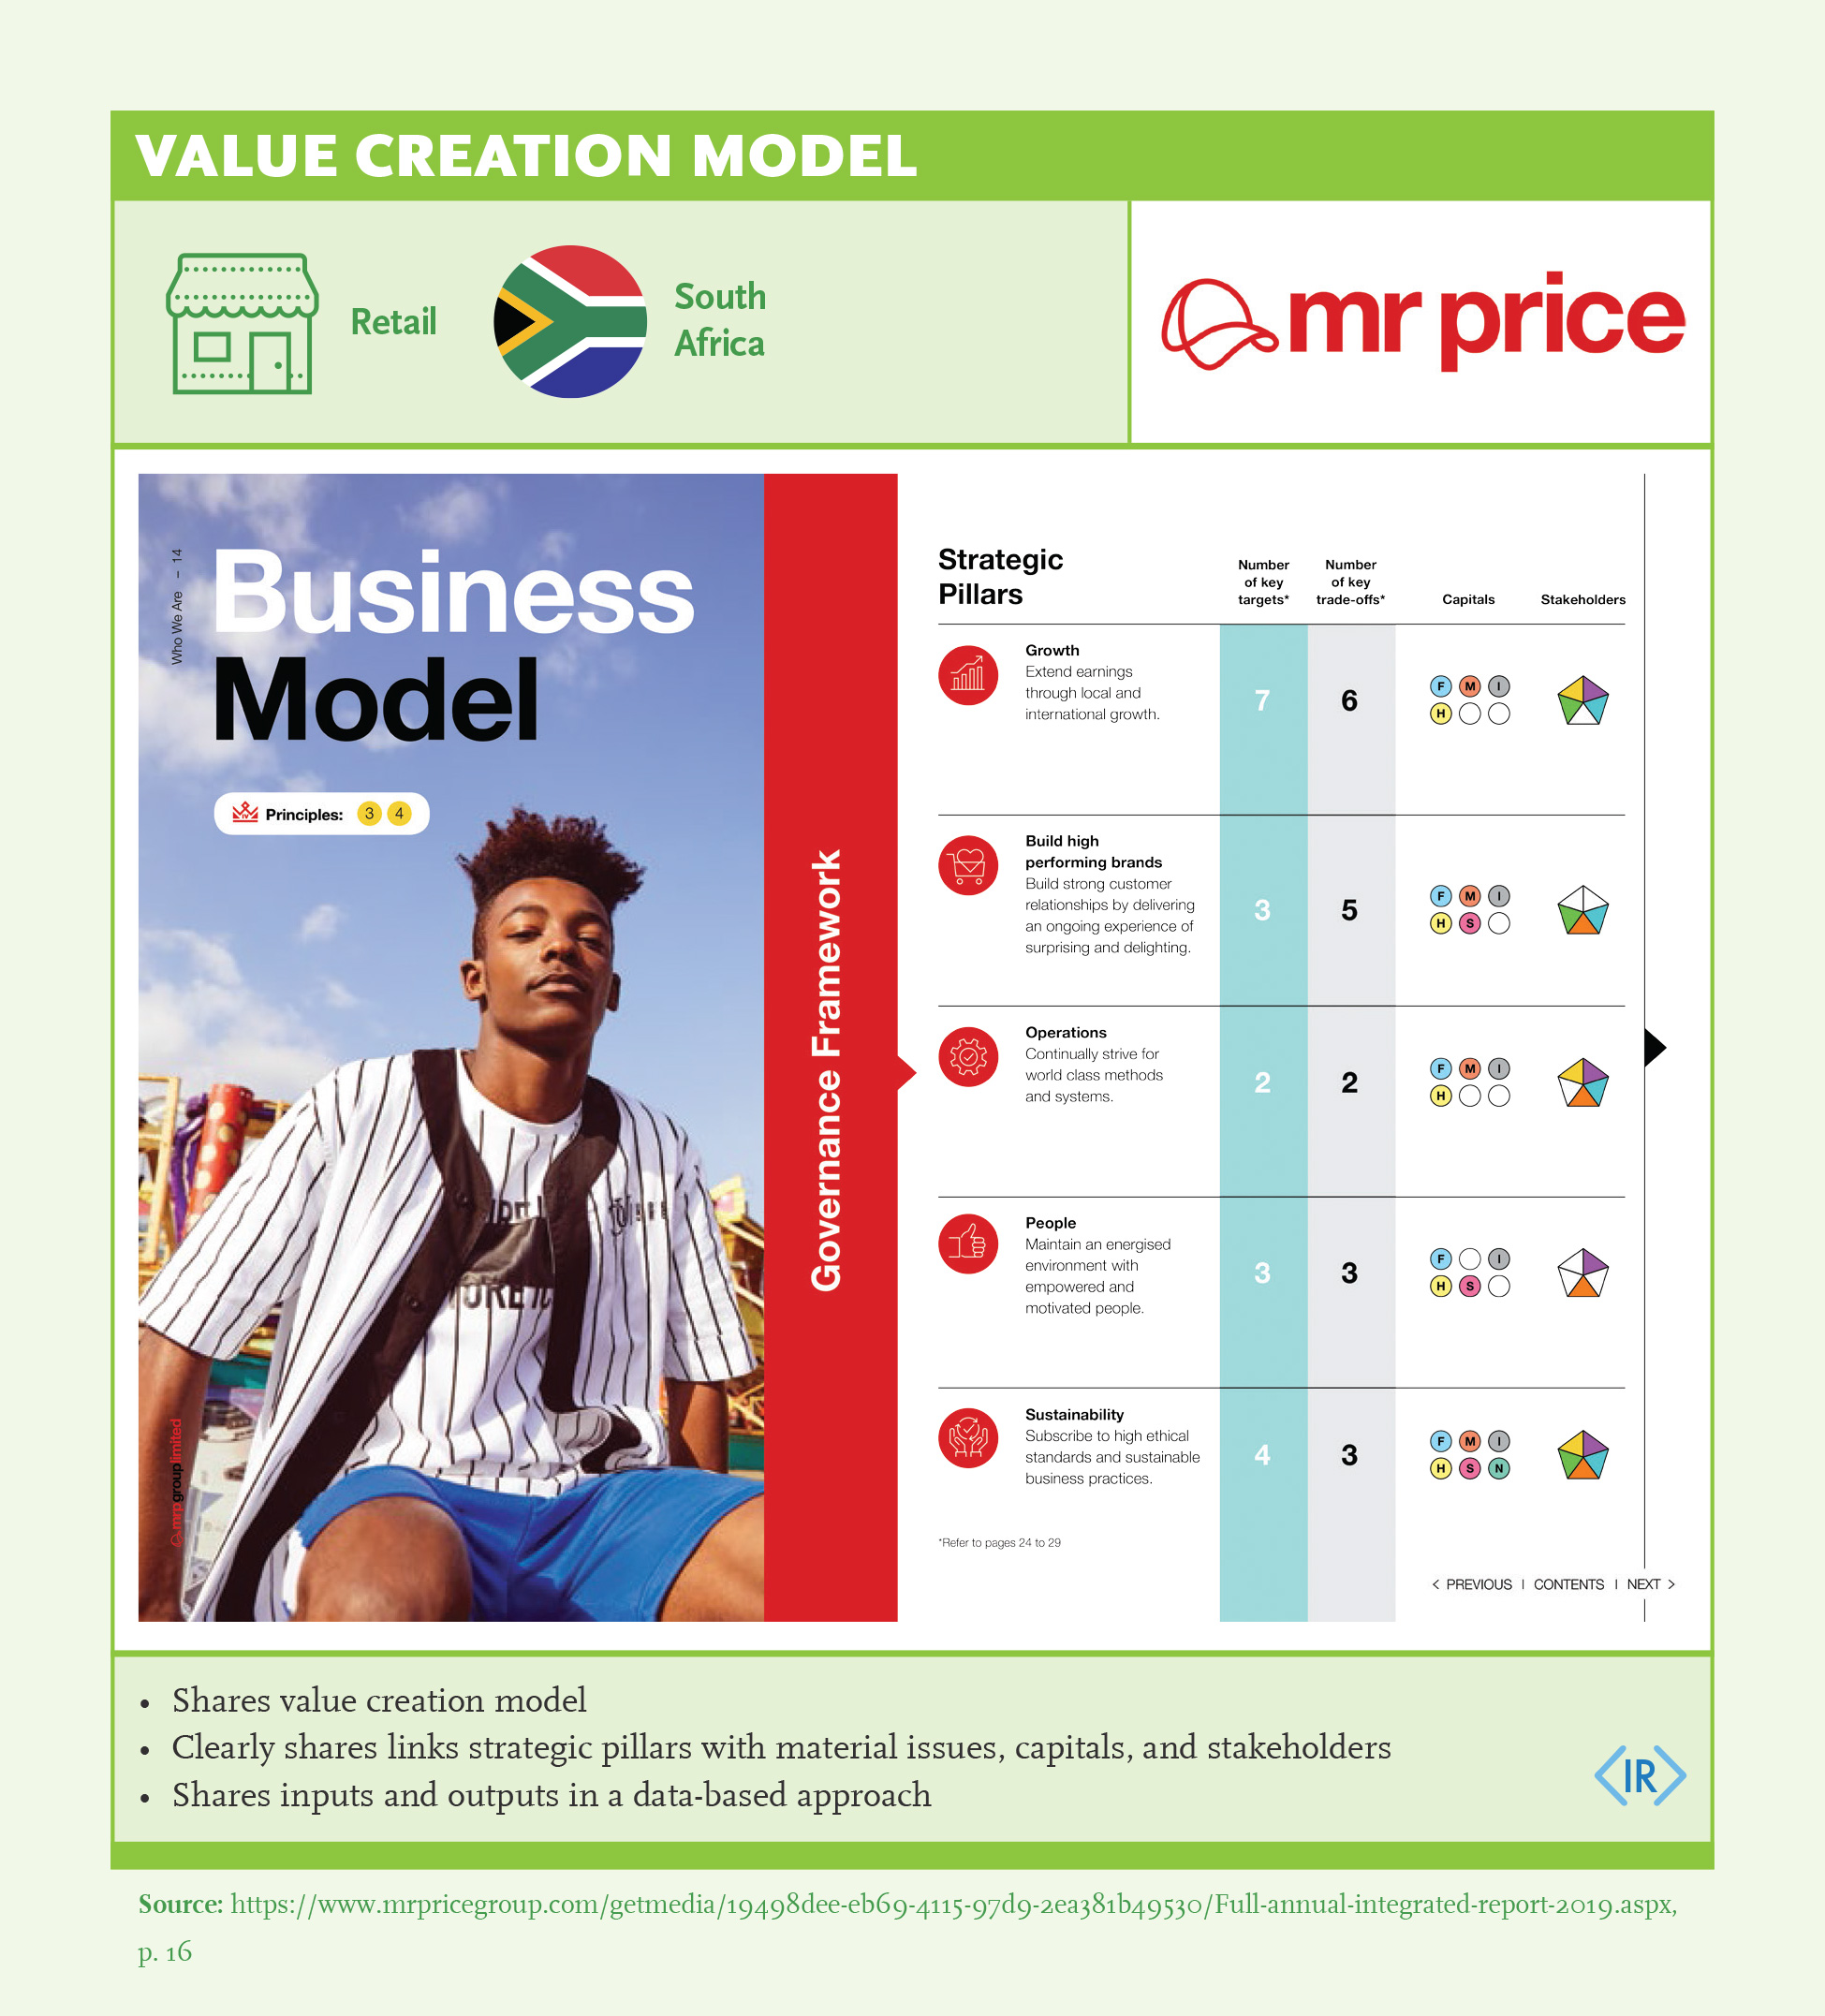 Value Creation Model: Mr. Price